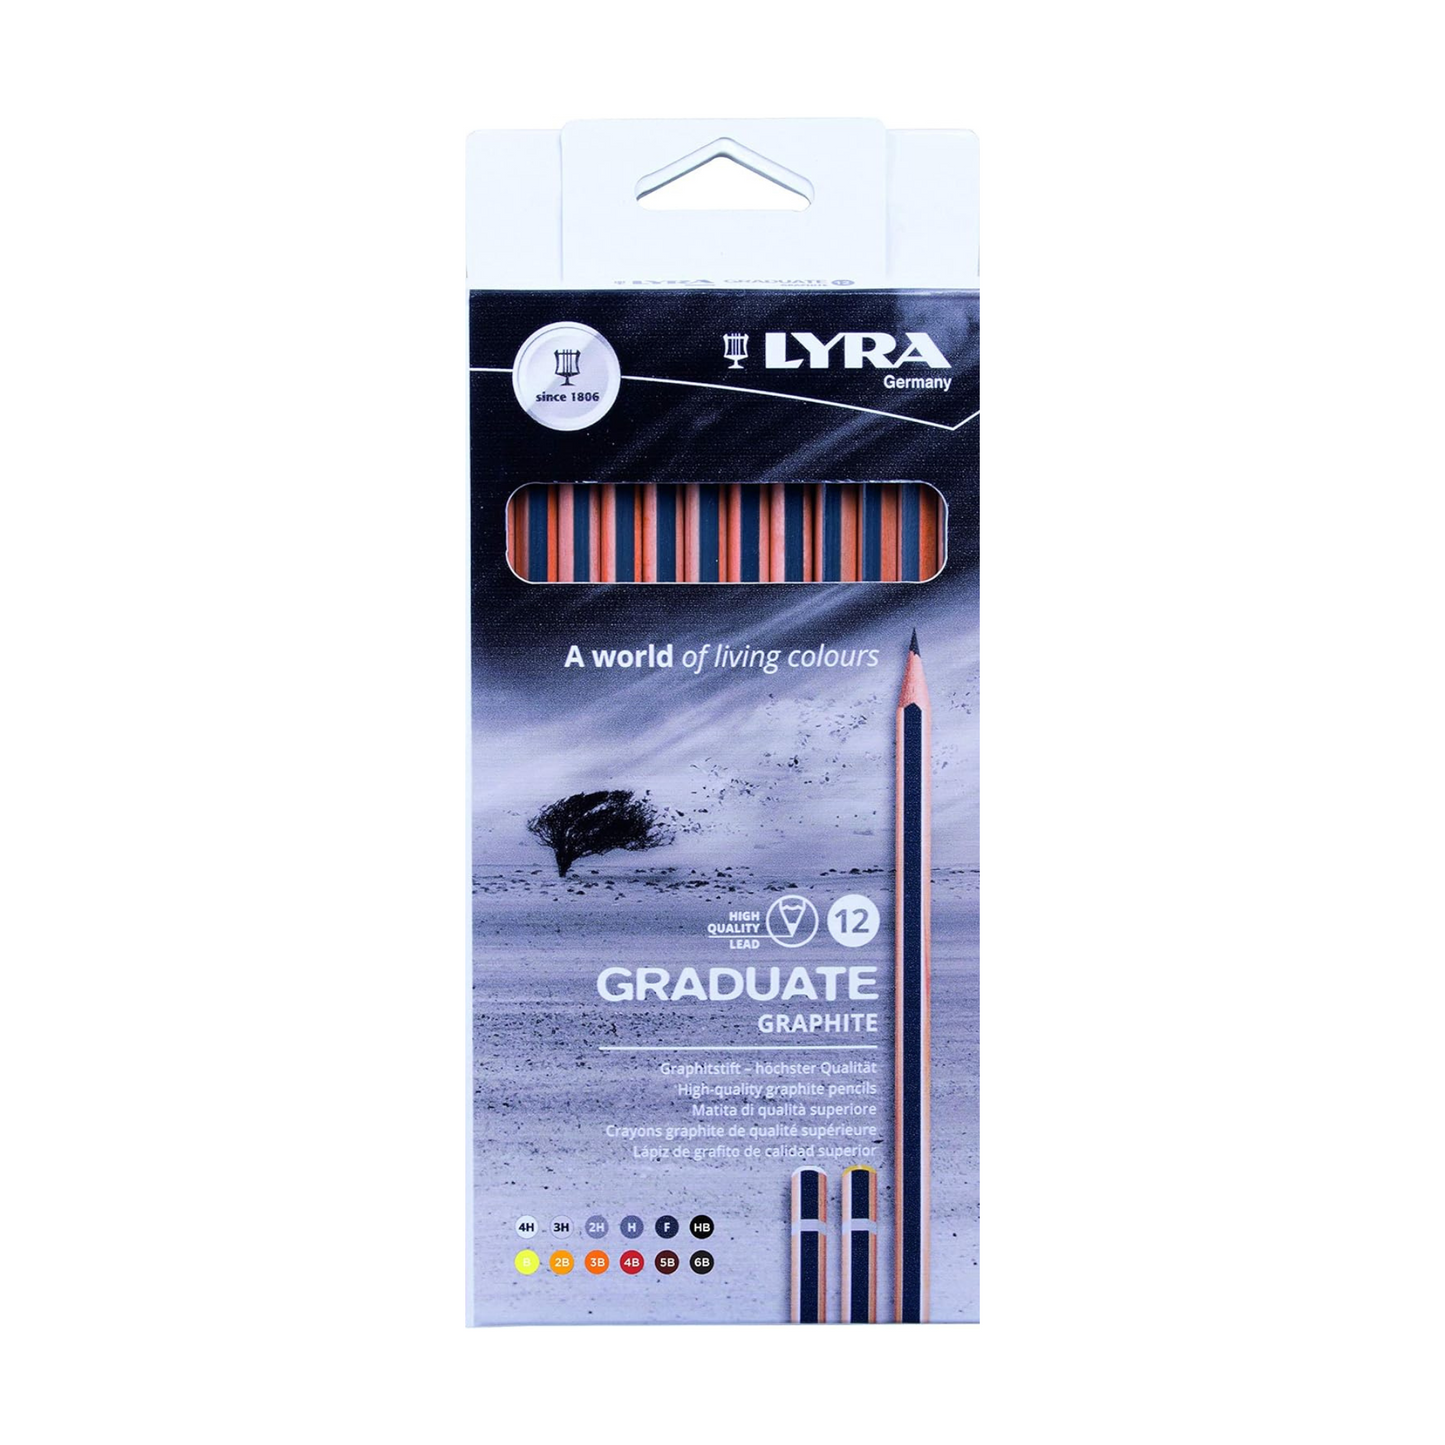 Lyra Graduate Graphite Pencils (set of 12 in a box)